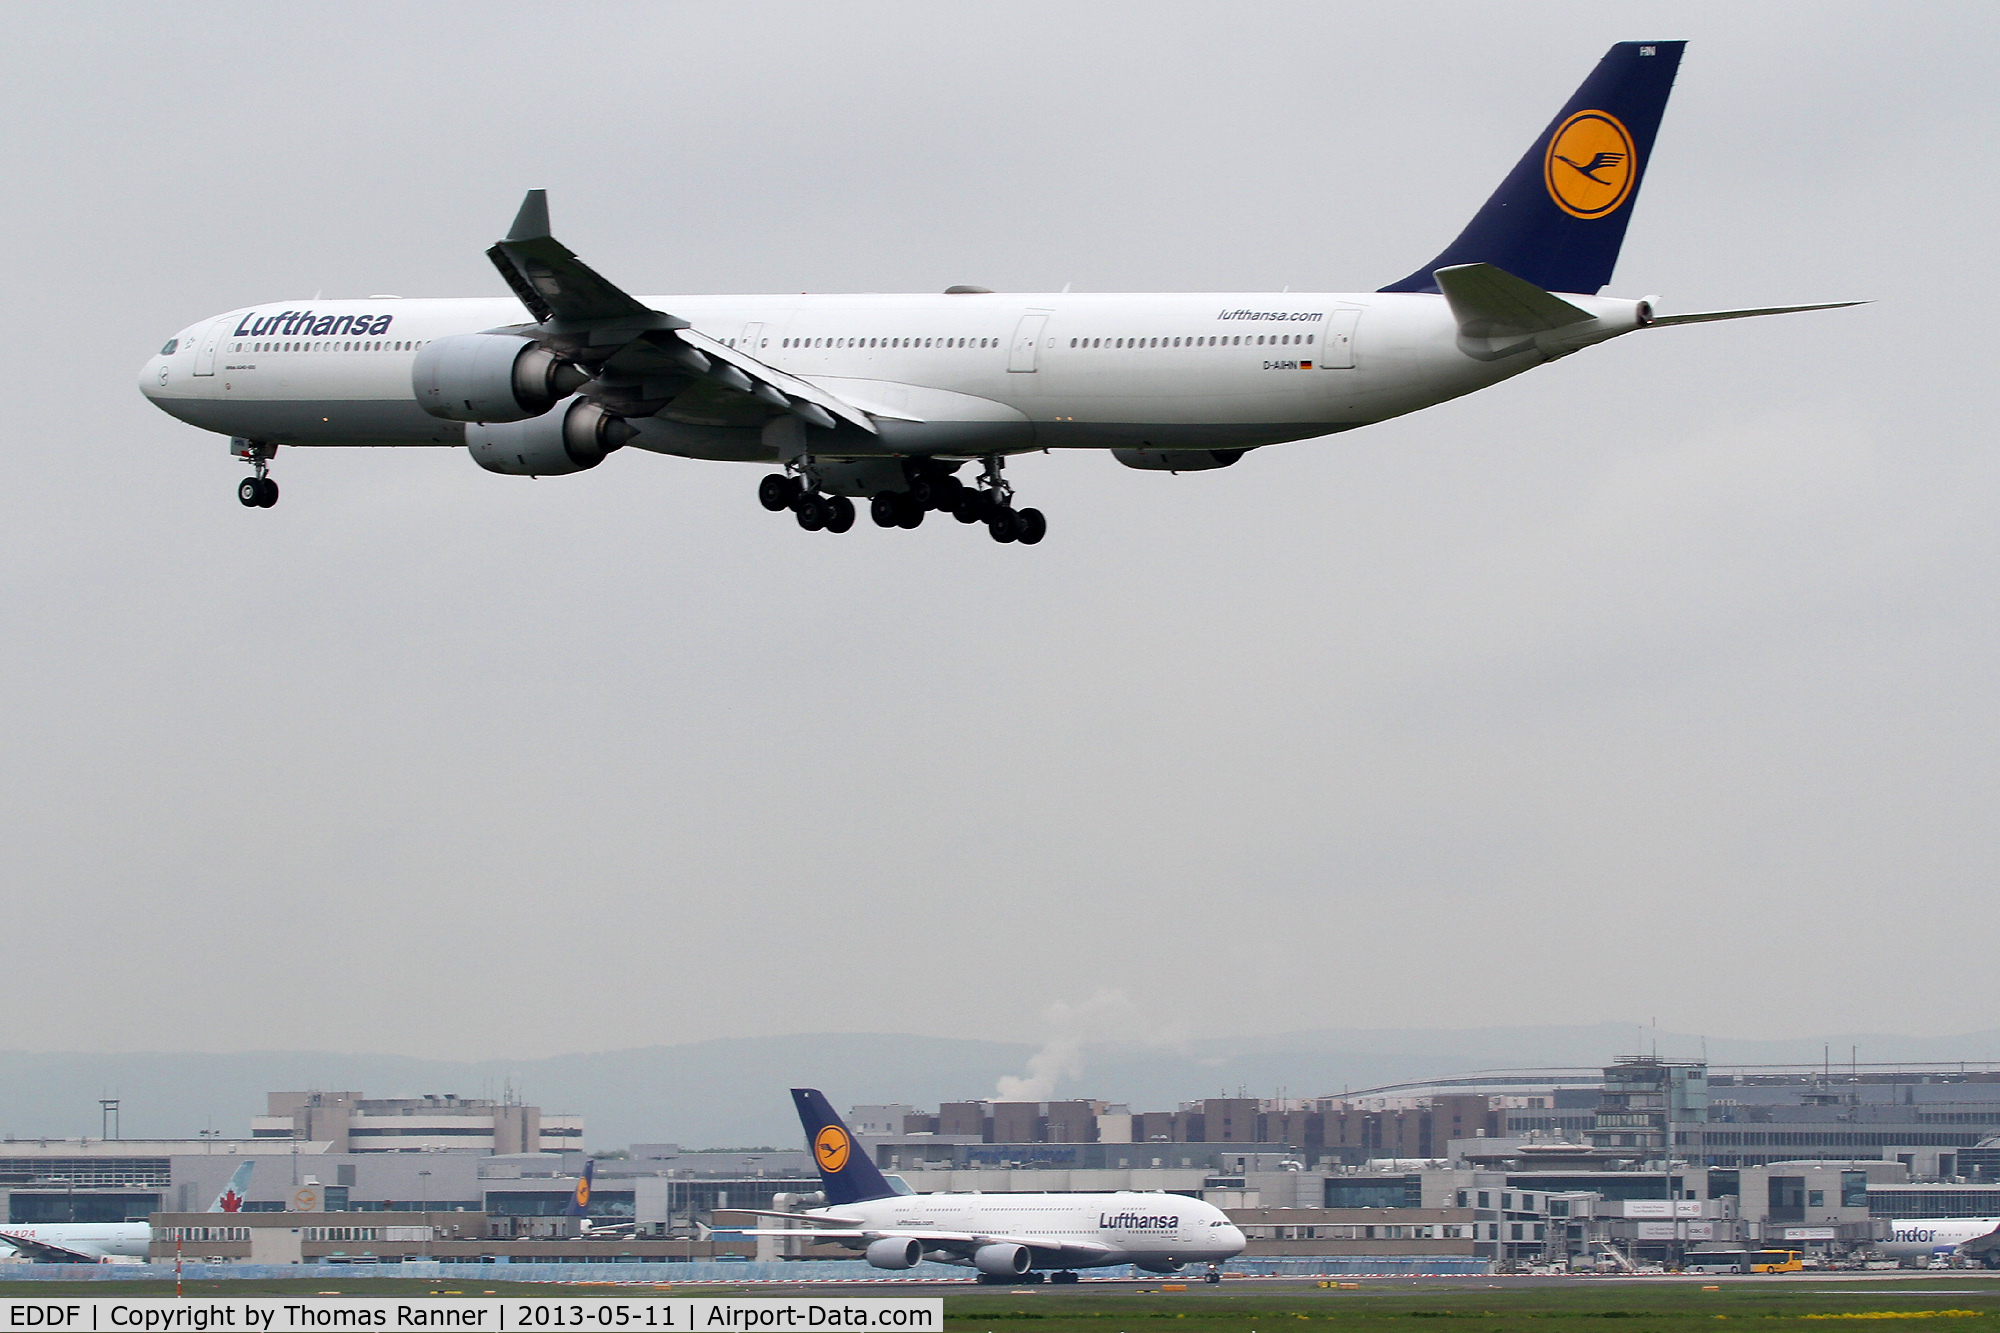 Frankfurt International Airport, Frankfurt am Main Germany (EDDF) - two Lufthansa heavy's